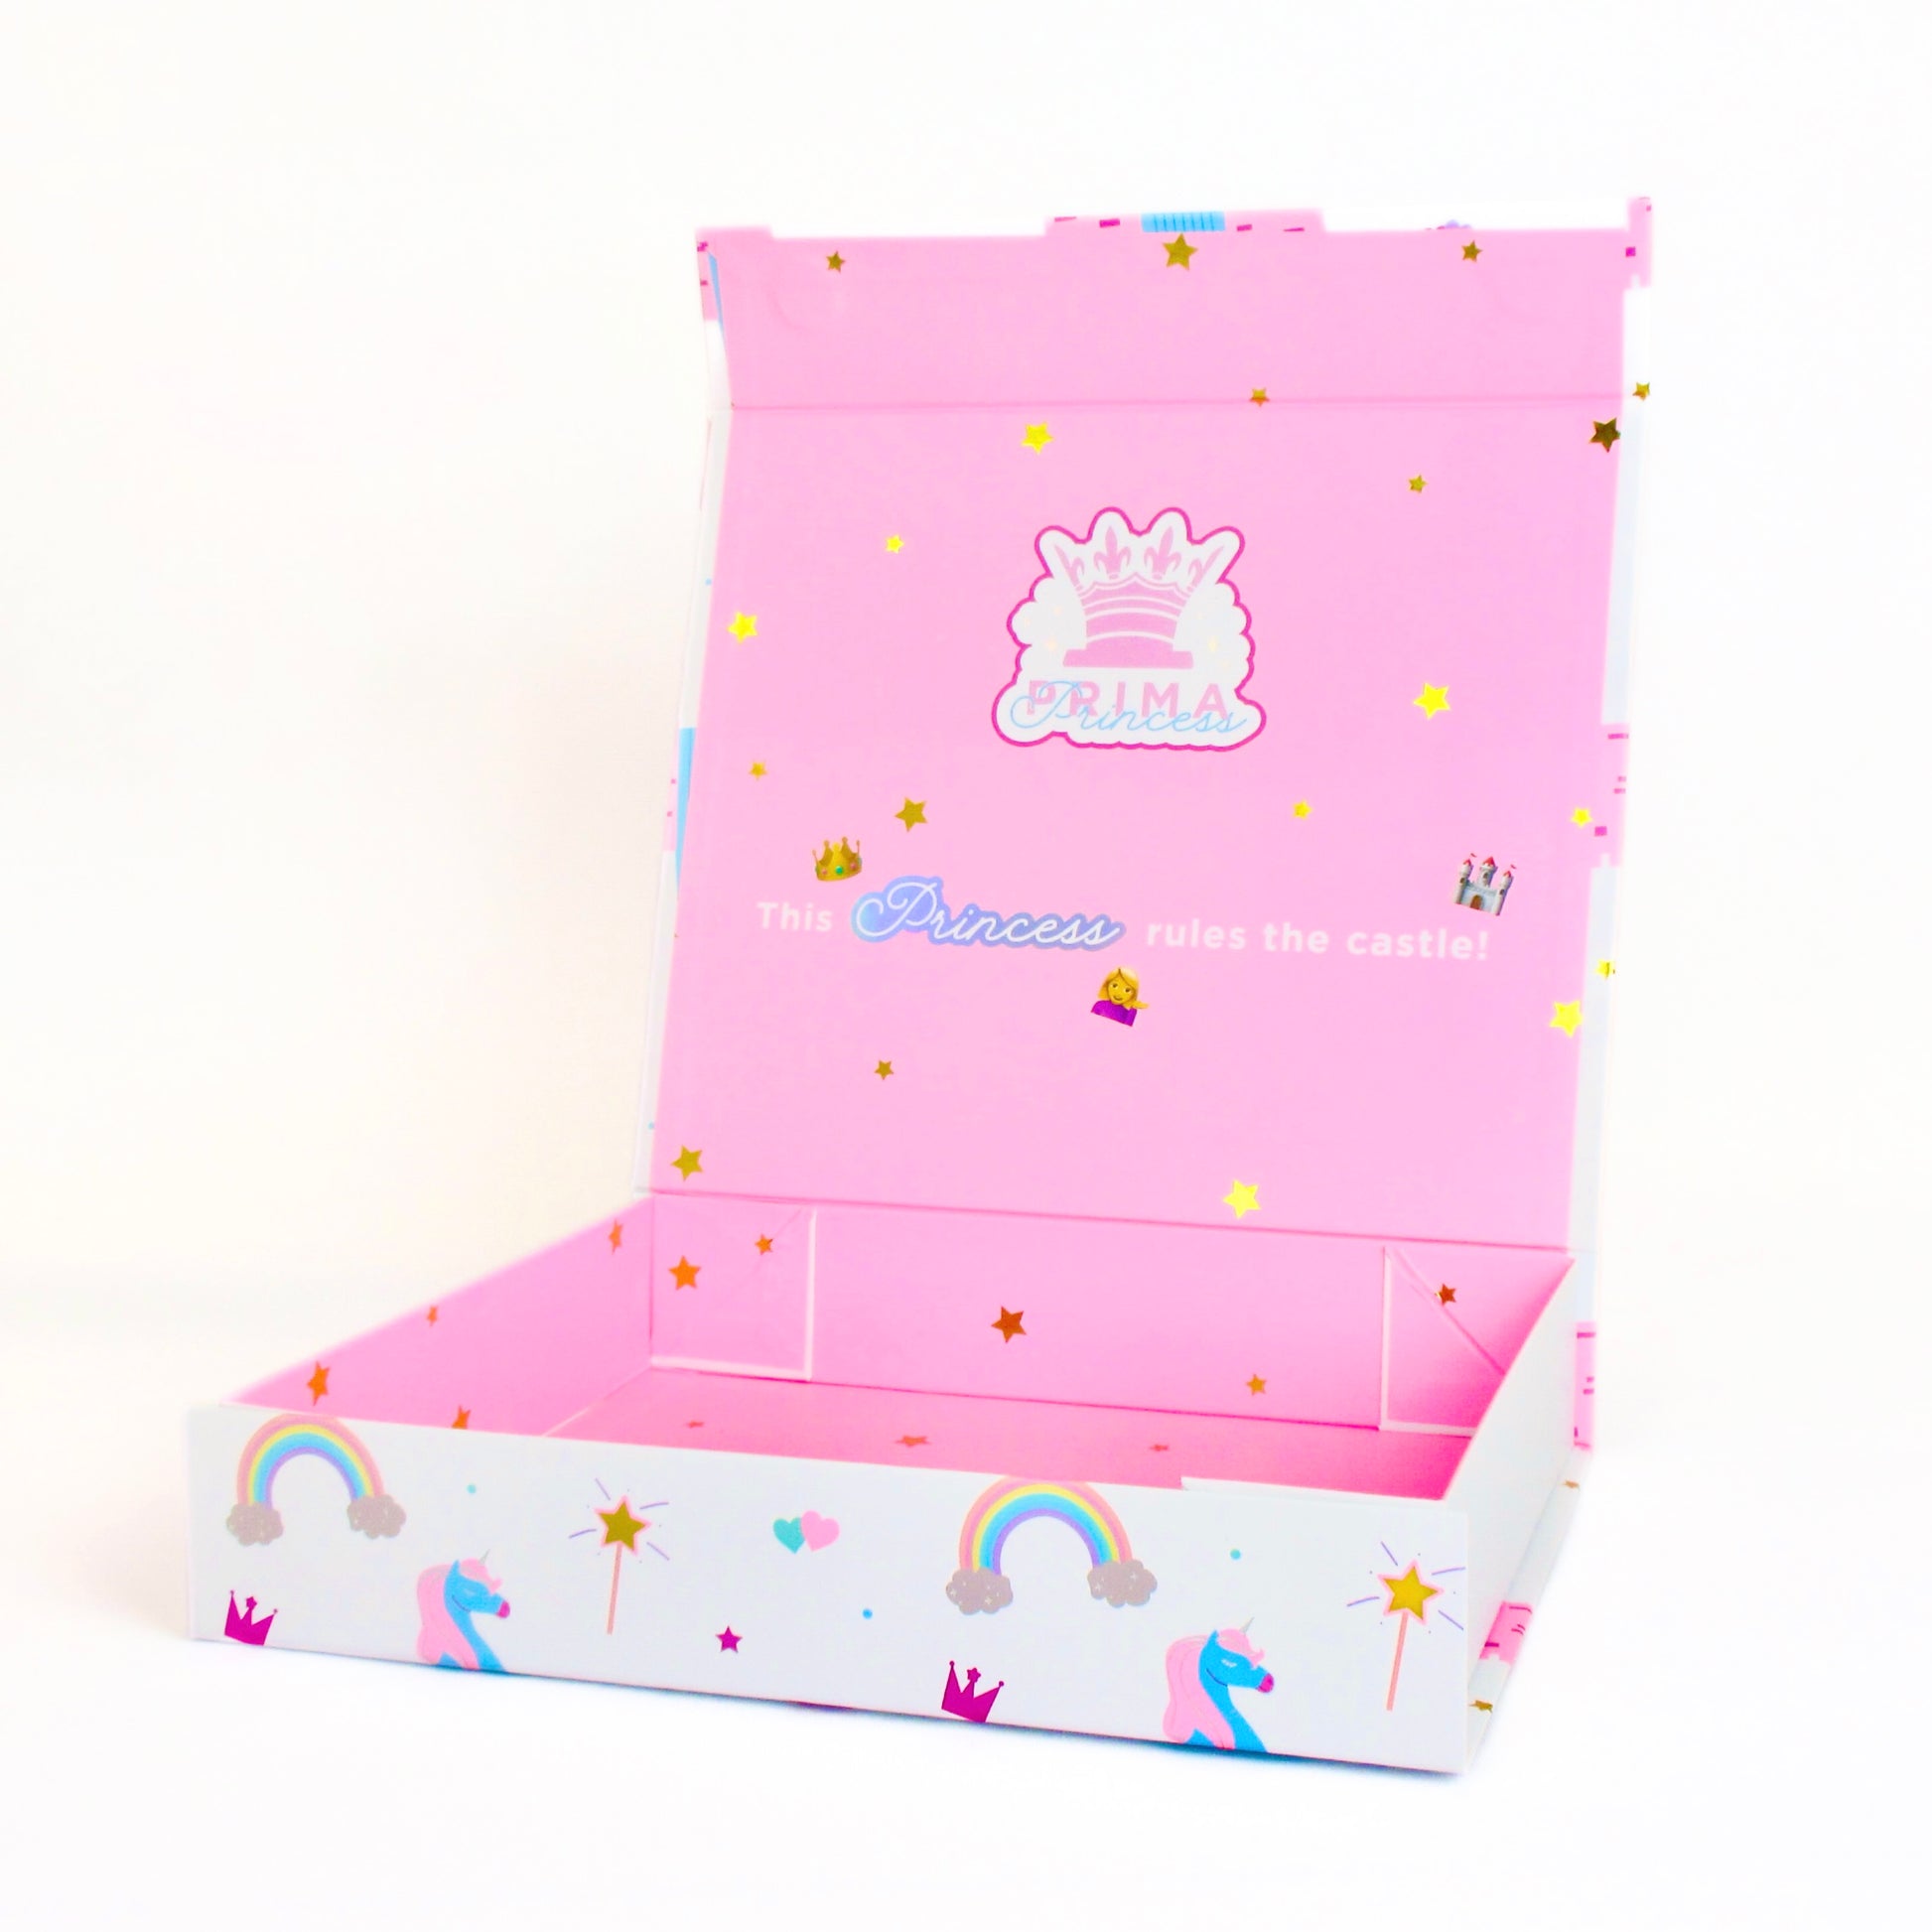 prima princess gift box example